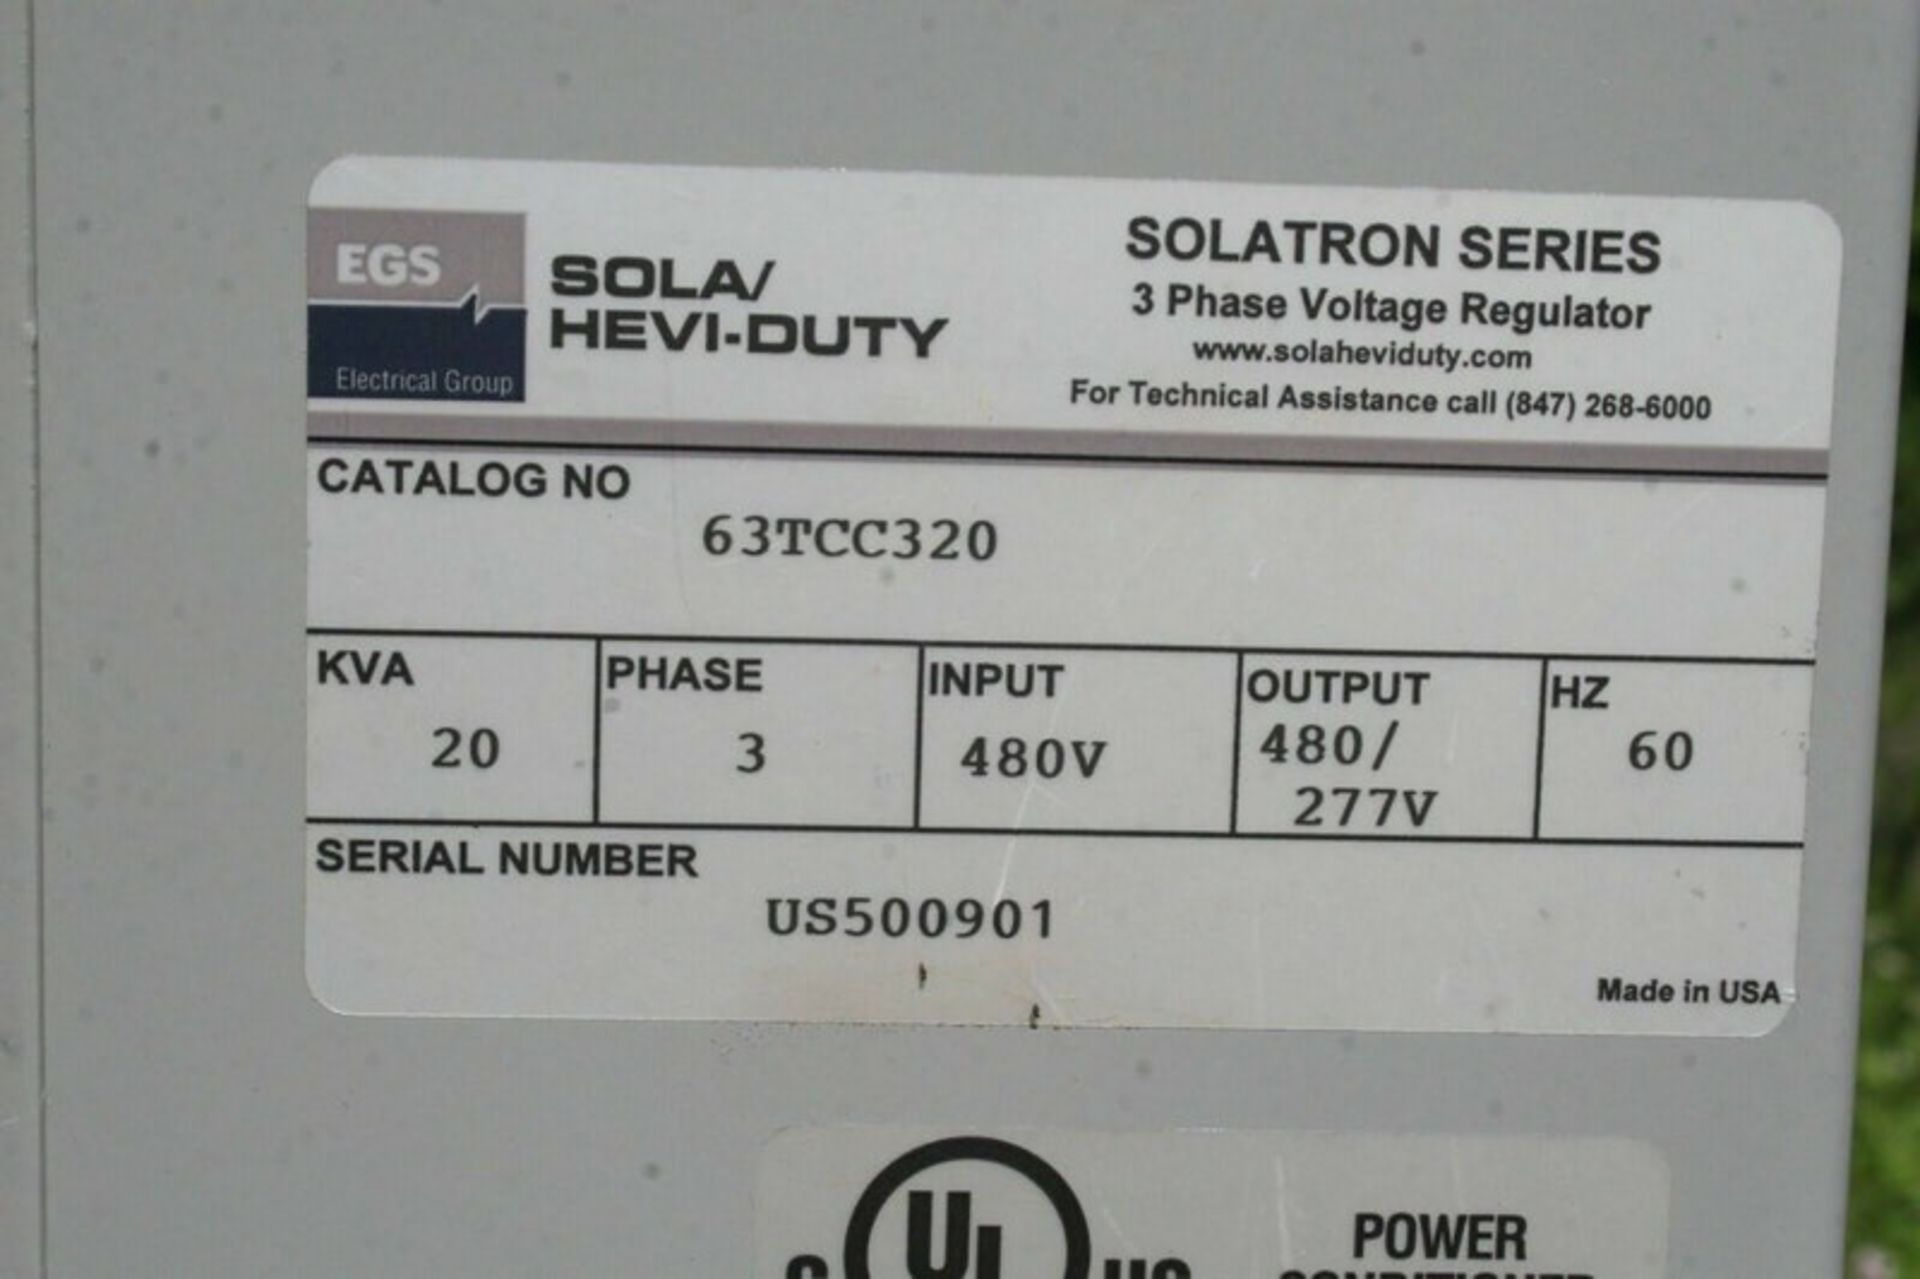 EGS Solatron Series Transformer, Catalog 63TCC320, ,S/N US500901, KVA 20, 3 Phase, 480 V Input, - Image 5 of 5